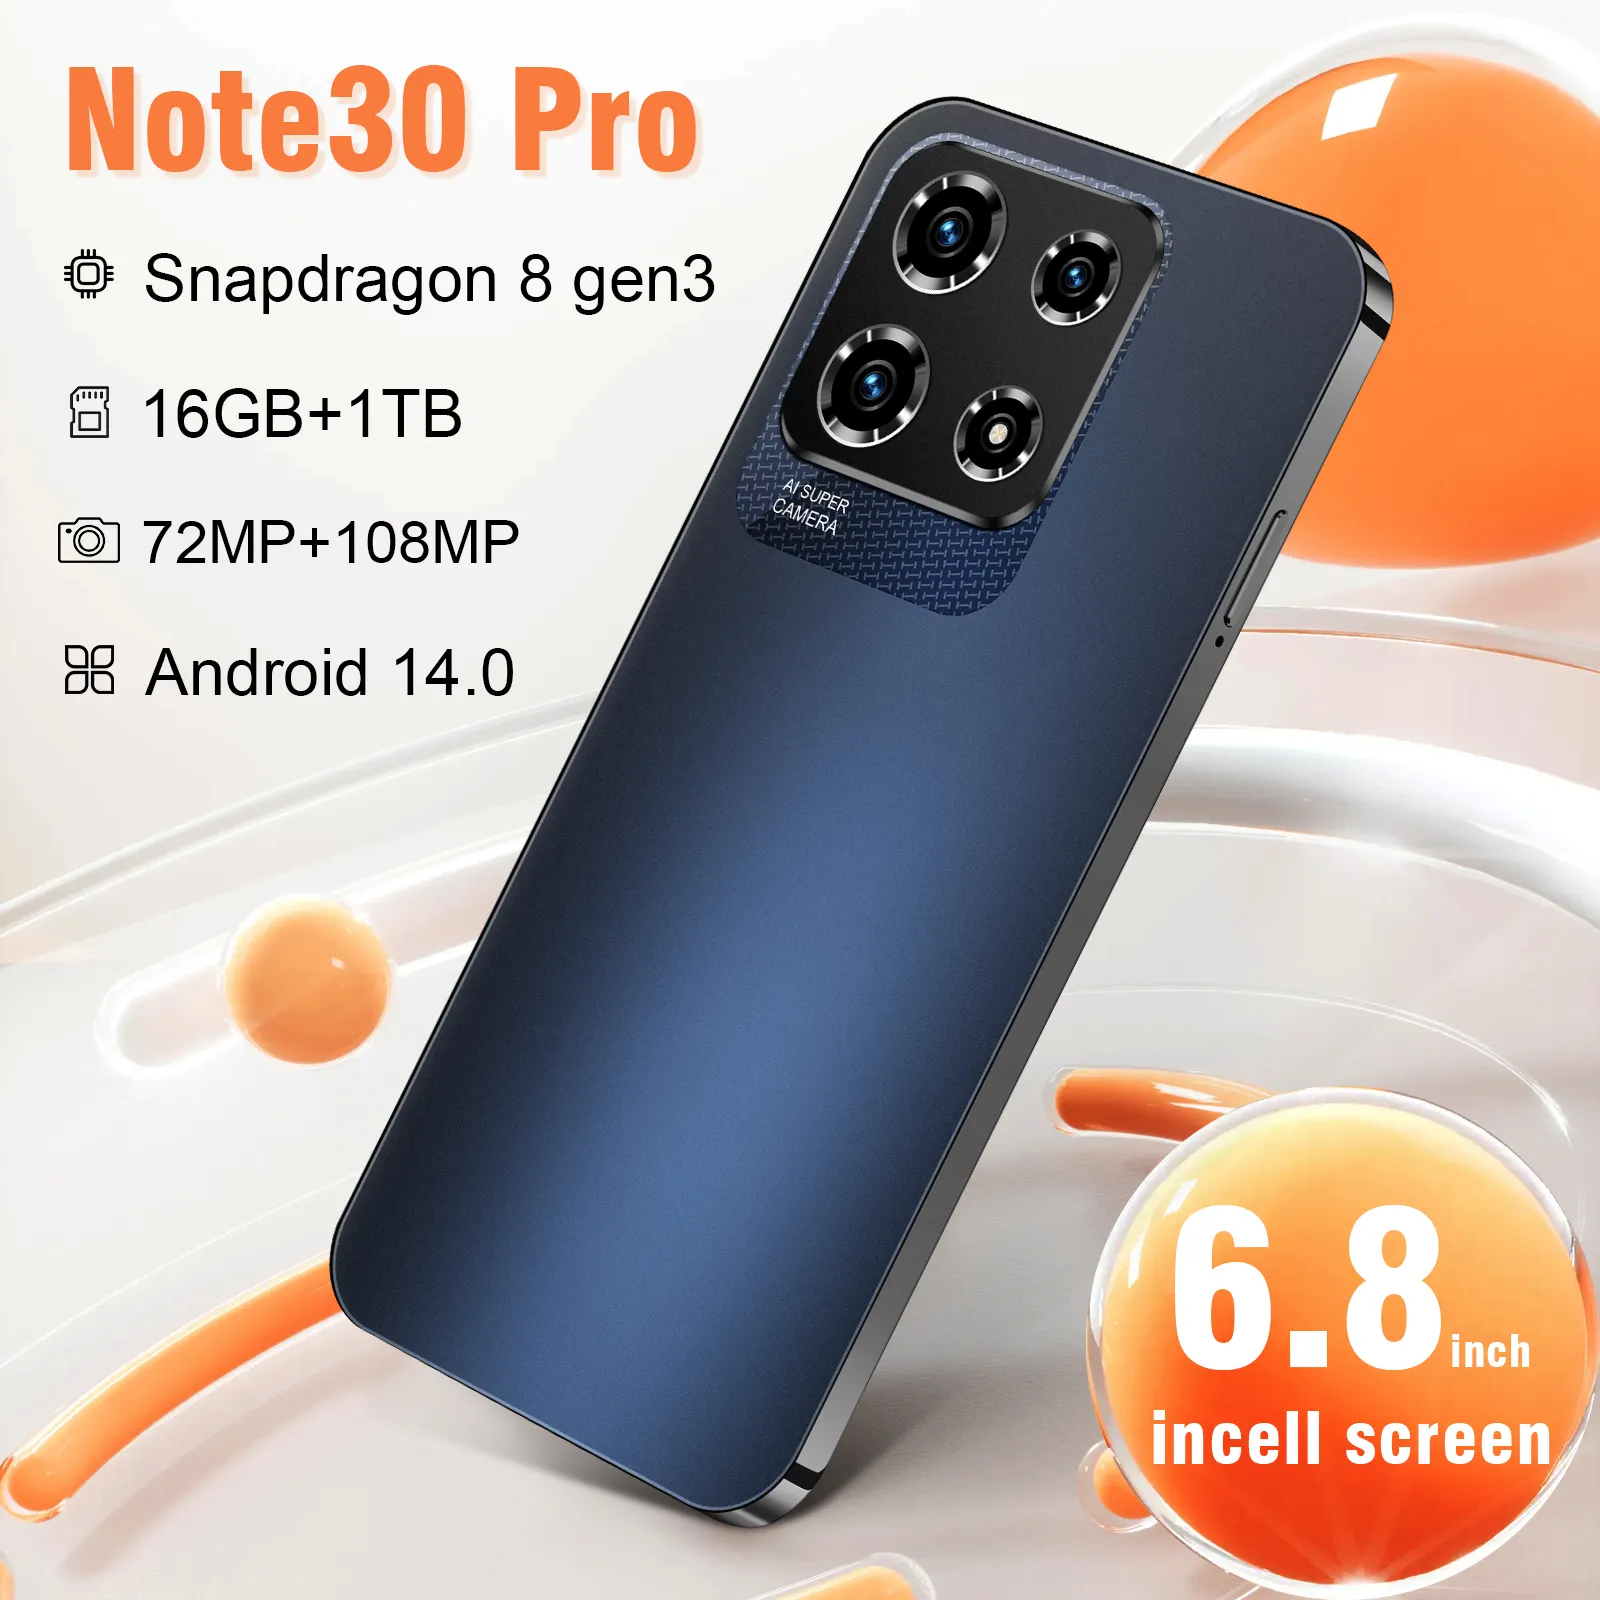 नोट30 प्रो नोट20 6.8 इंच एंड्रॉइड 14.0 फोन 16 जीबी+1 टीबी आईपीएस टच स्क्रीन वाईफ़ाई टेलीफ़ोनोस मोविल्स स्मार्टफोन मोबाइल फोन